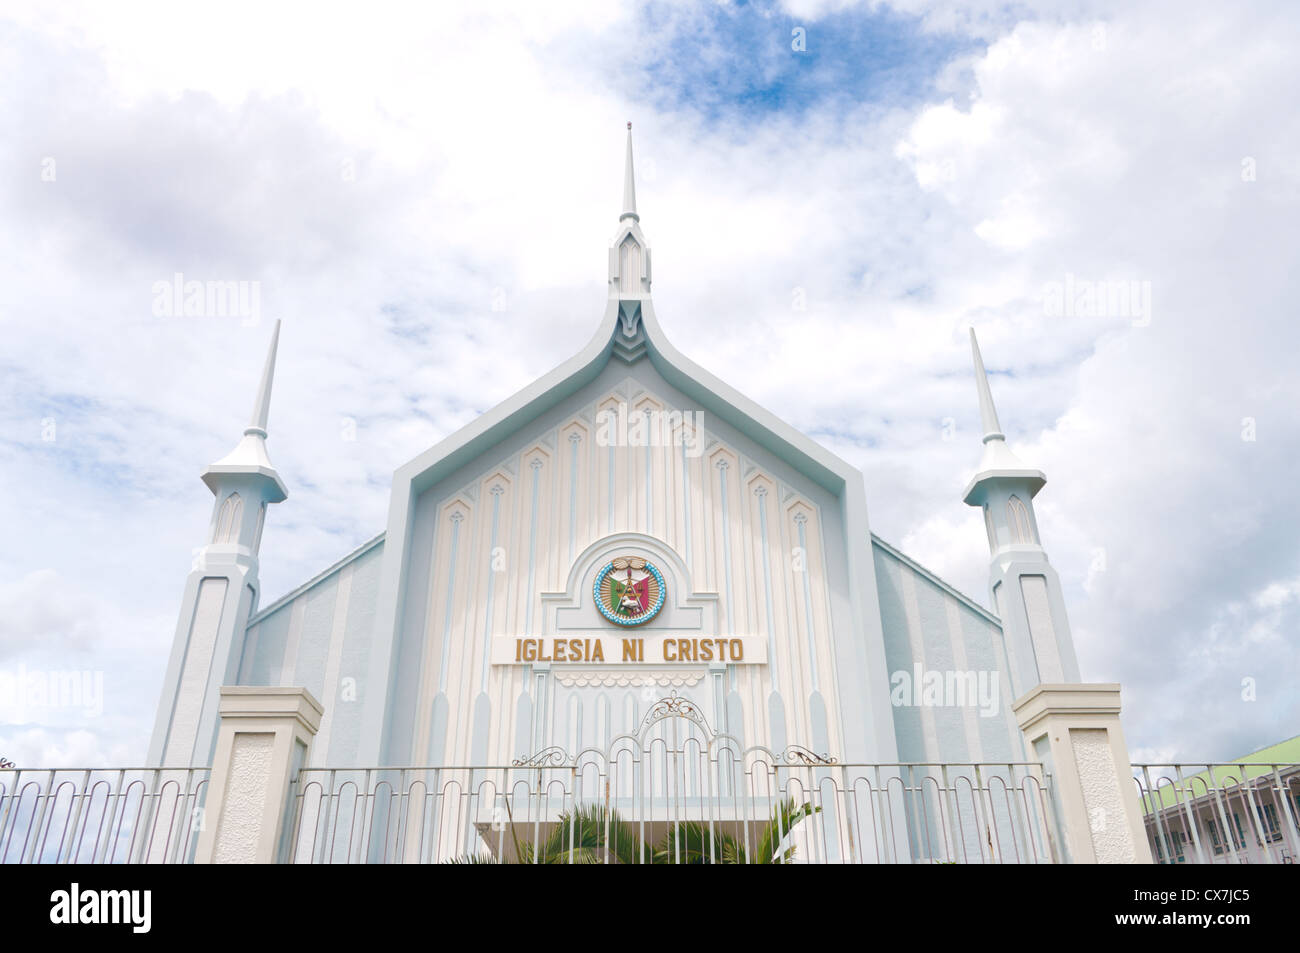 catholic white church in Naga city, Philippines. Iglesia ni cristo means in Philippine language (tagalog) church of christ. Stock Photo